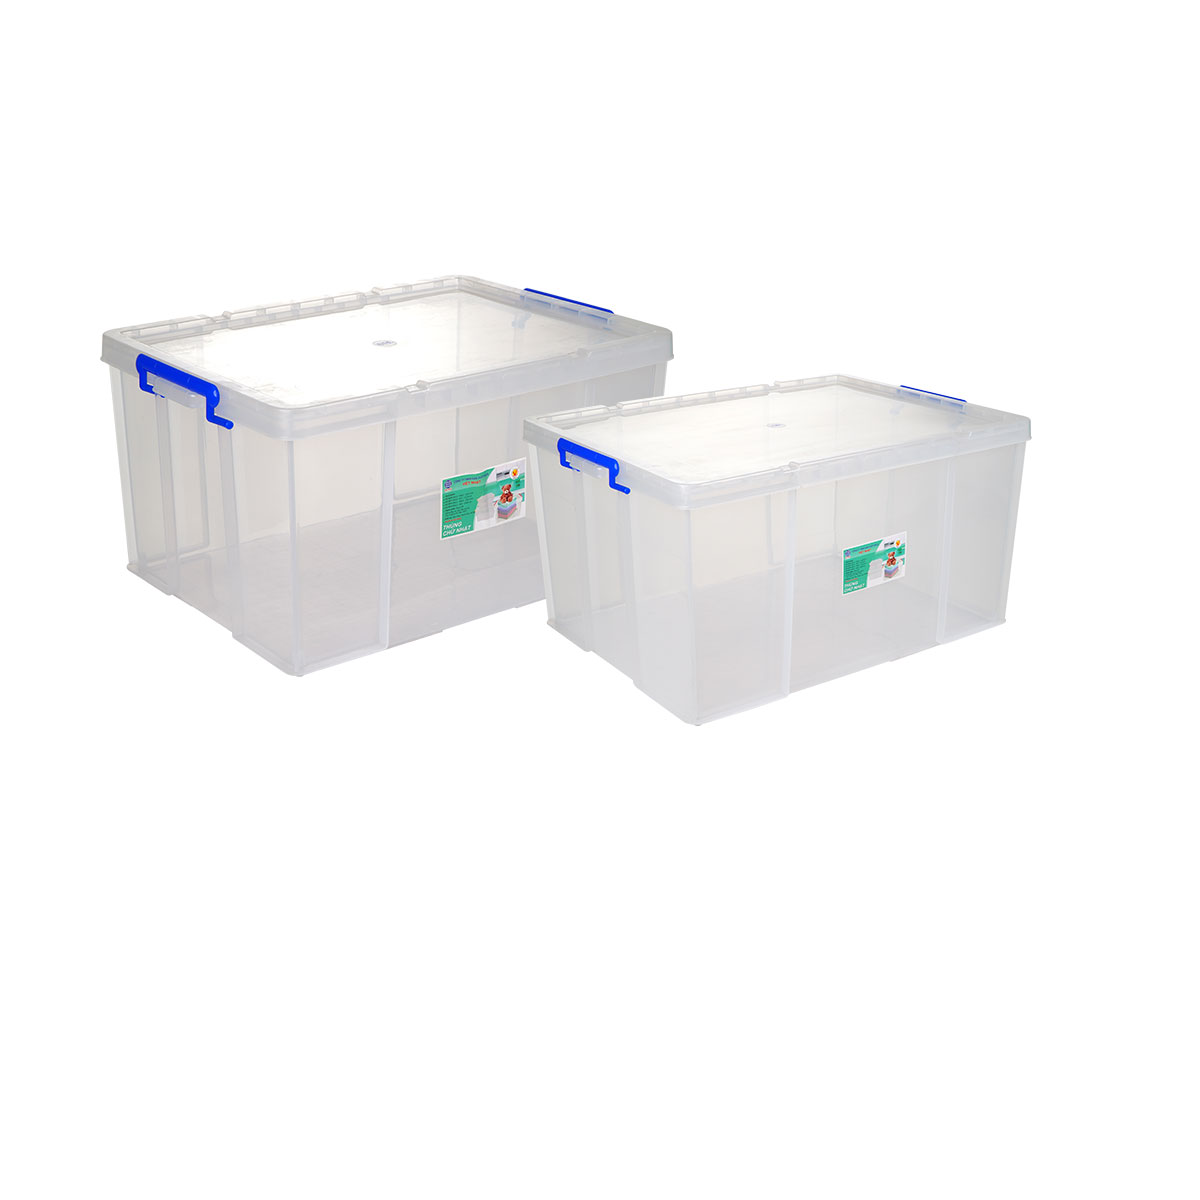 Pair of Large Rectangular Storage Container